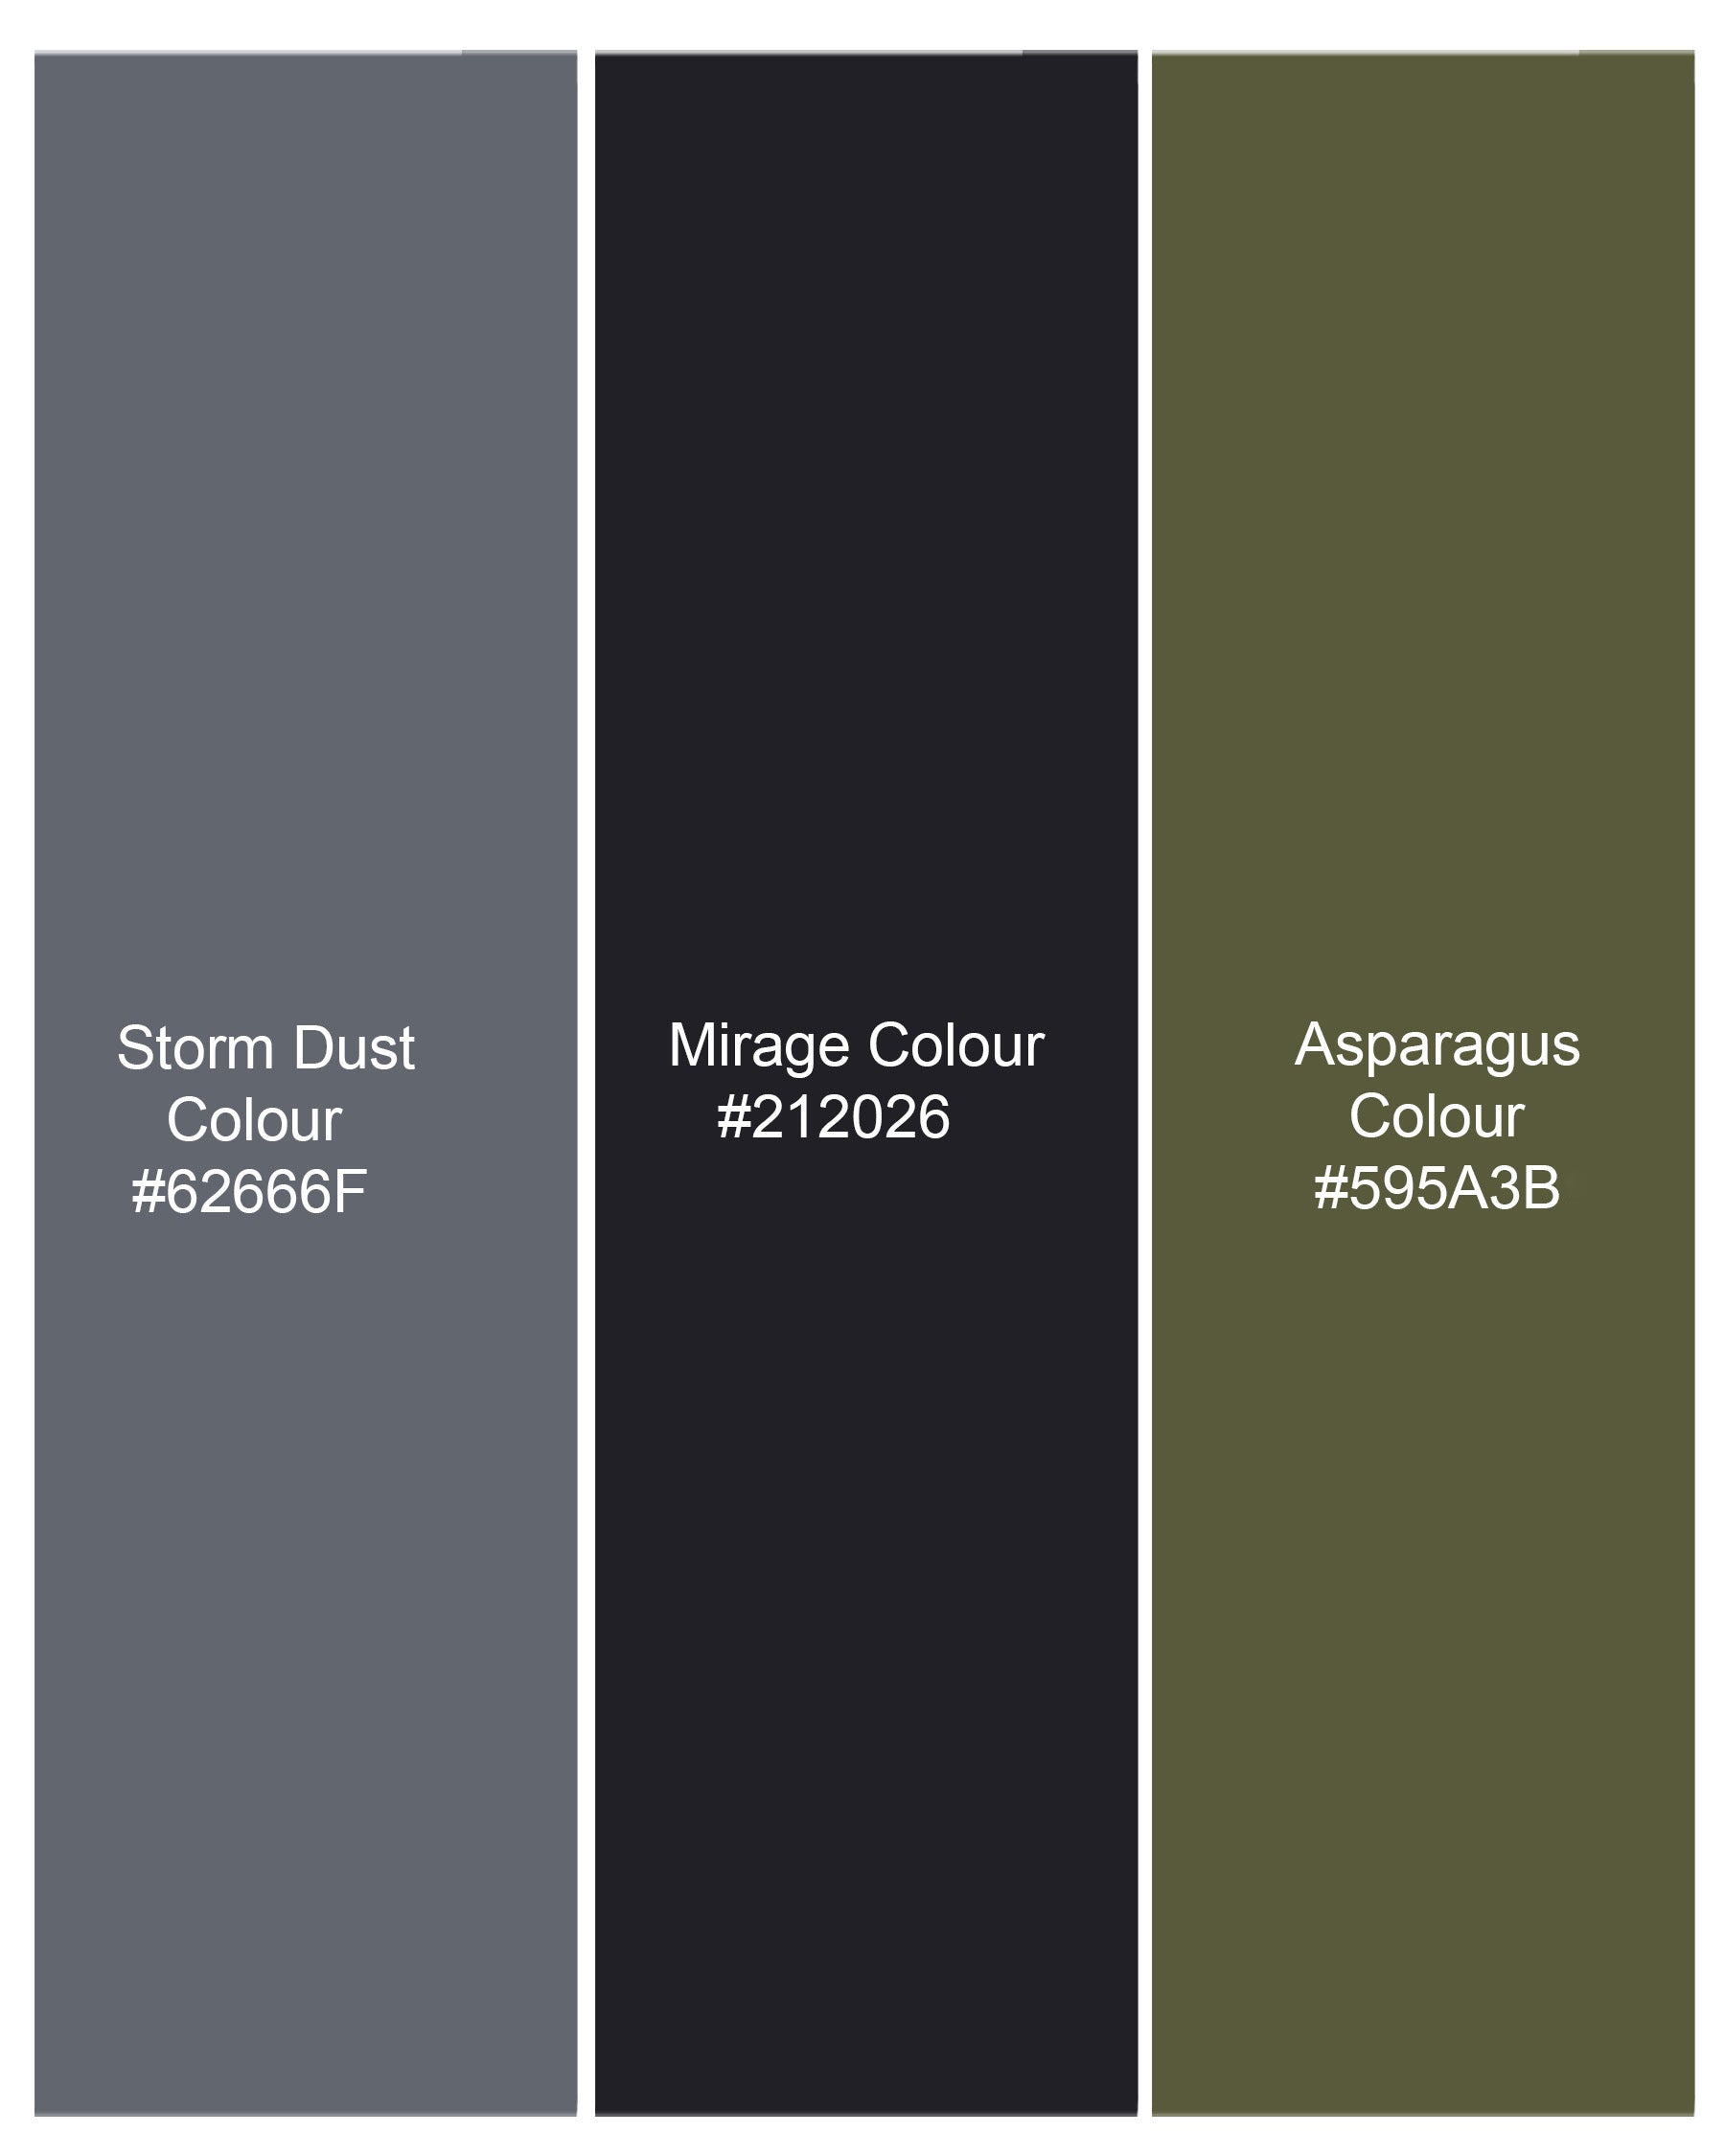 Storm Dust Gray and Mirage Black Paisley Printed Super Soft Premium Cotton Shirt 7757-GR-38,7757-GR-38,7757-GR-39,7757-GR-39,7757-GR-40,7757-GR-40,7757-GR-42,7757-GR-42,7757-GR-44,7757-GR-44,7757-GR-46,7757-GR-46,7757-GR-48,7757-GR-48,7757-GR-50,7757-GR-50,7757-GR-52,7757-GR-52